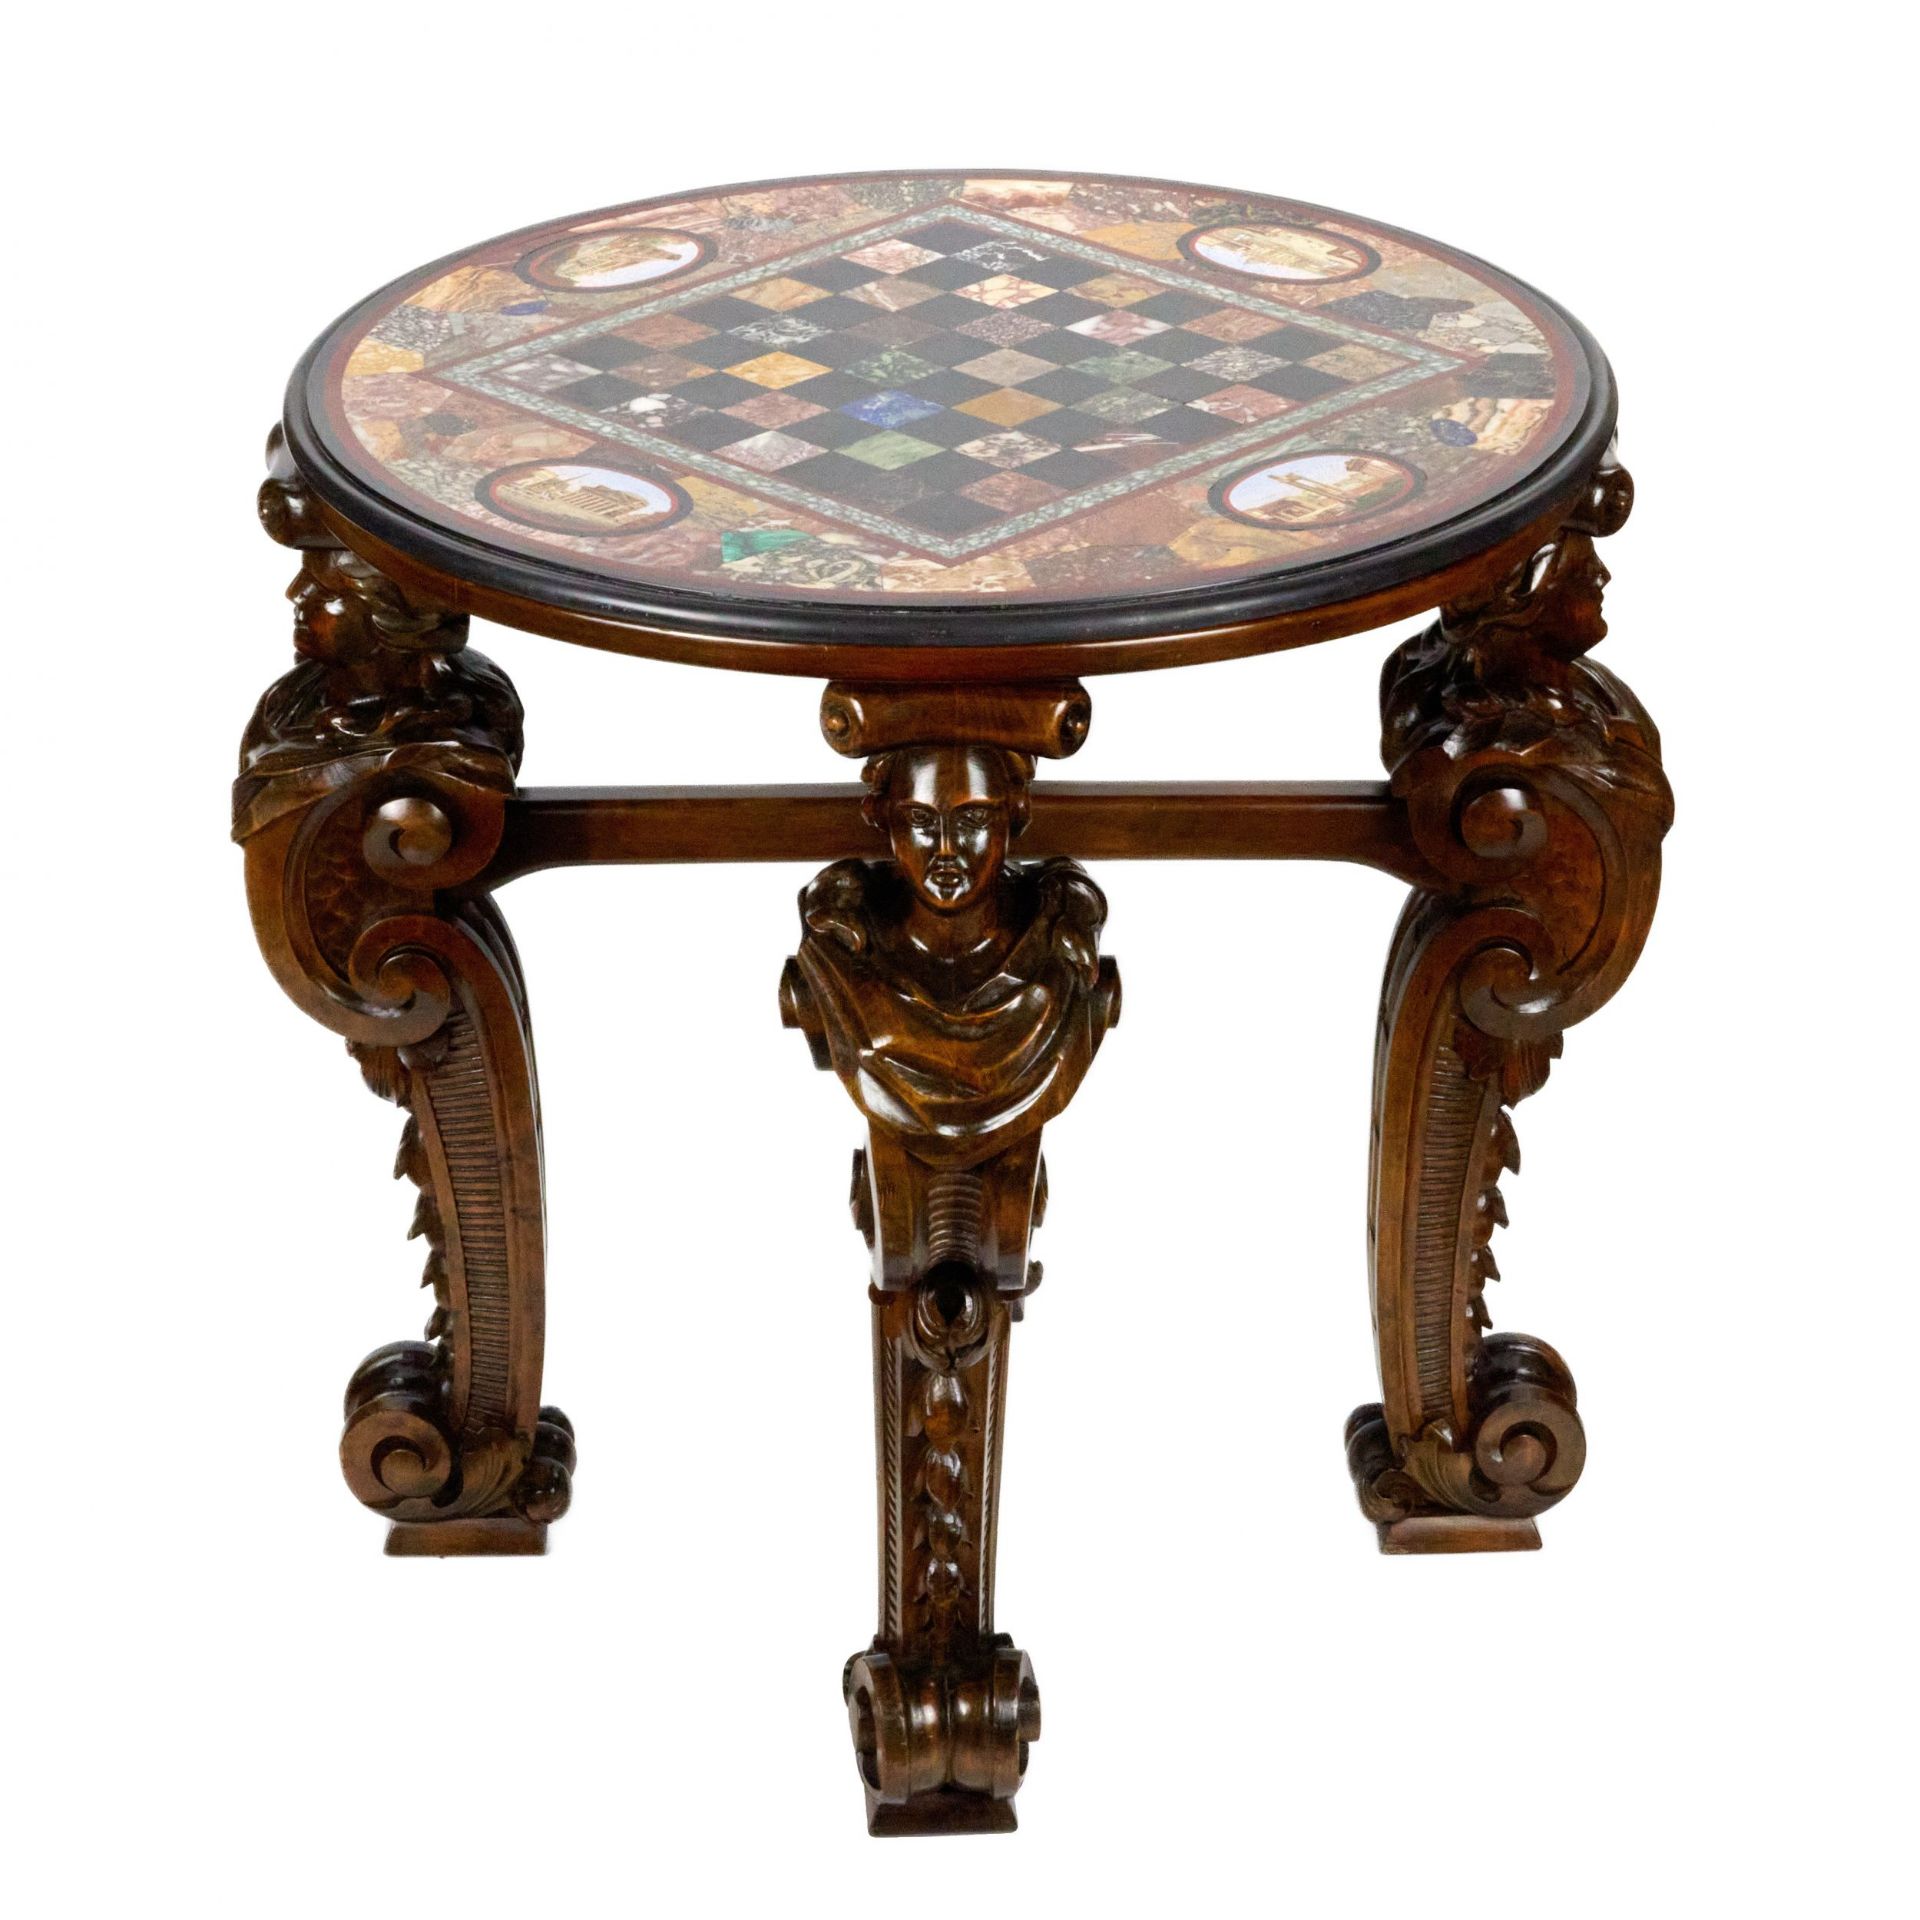 Impressive chess table with precious Roman mosaics on carved legs. - Bild 3 aus 10